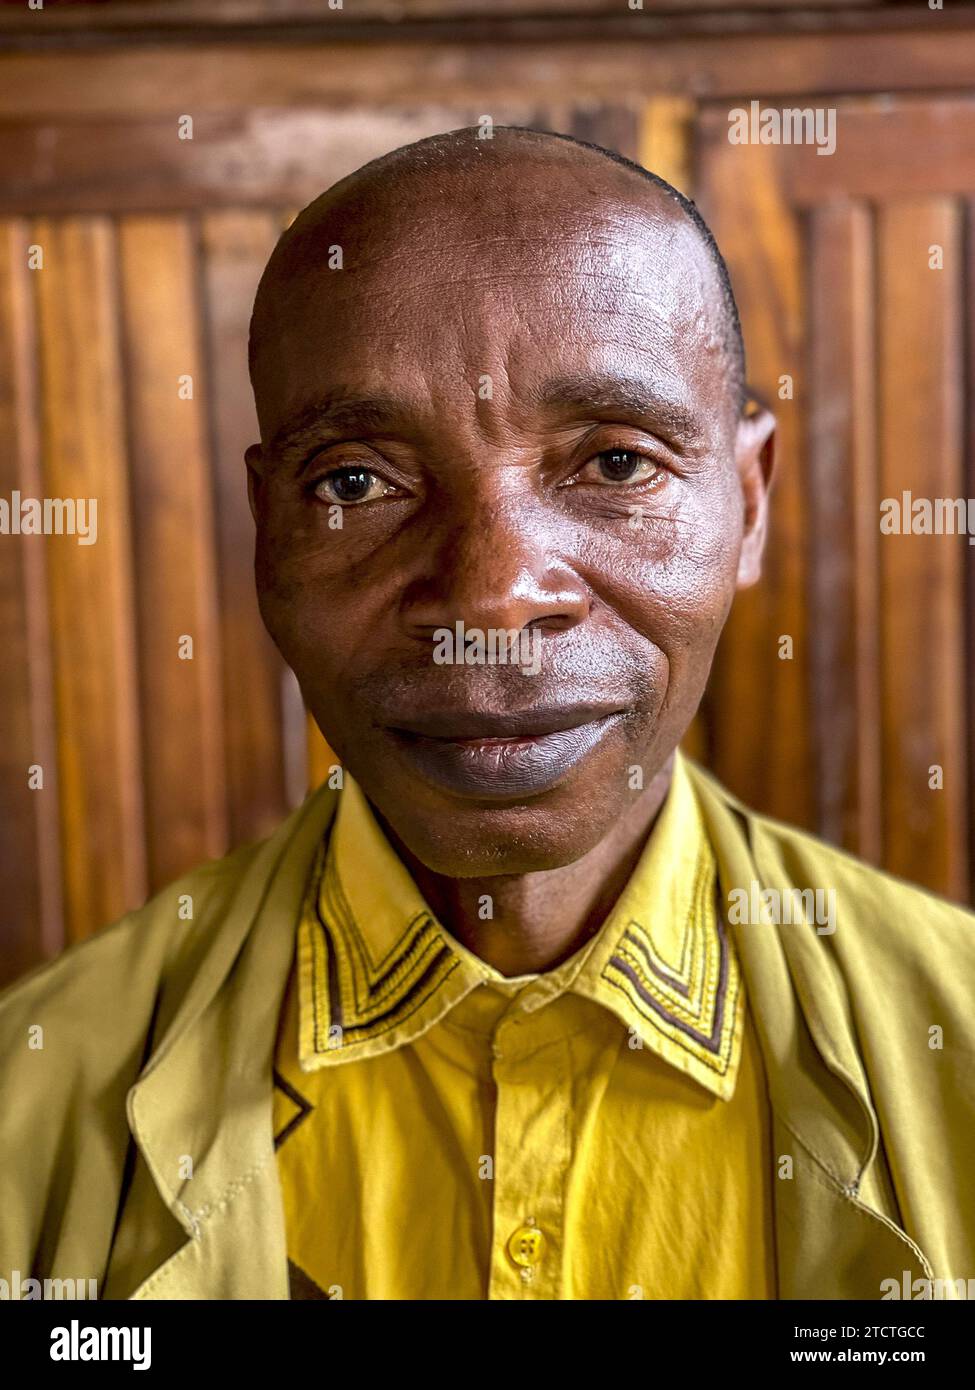 Portrait of a Congolese school master in Bukavu, DRC Stock Photo